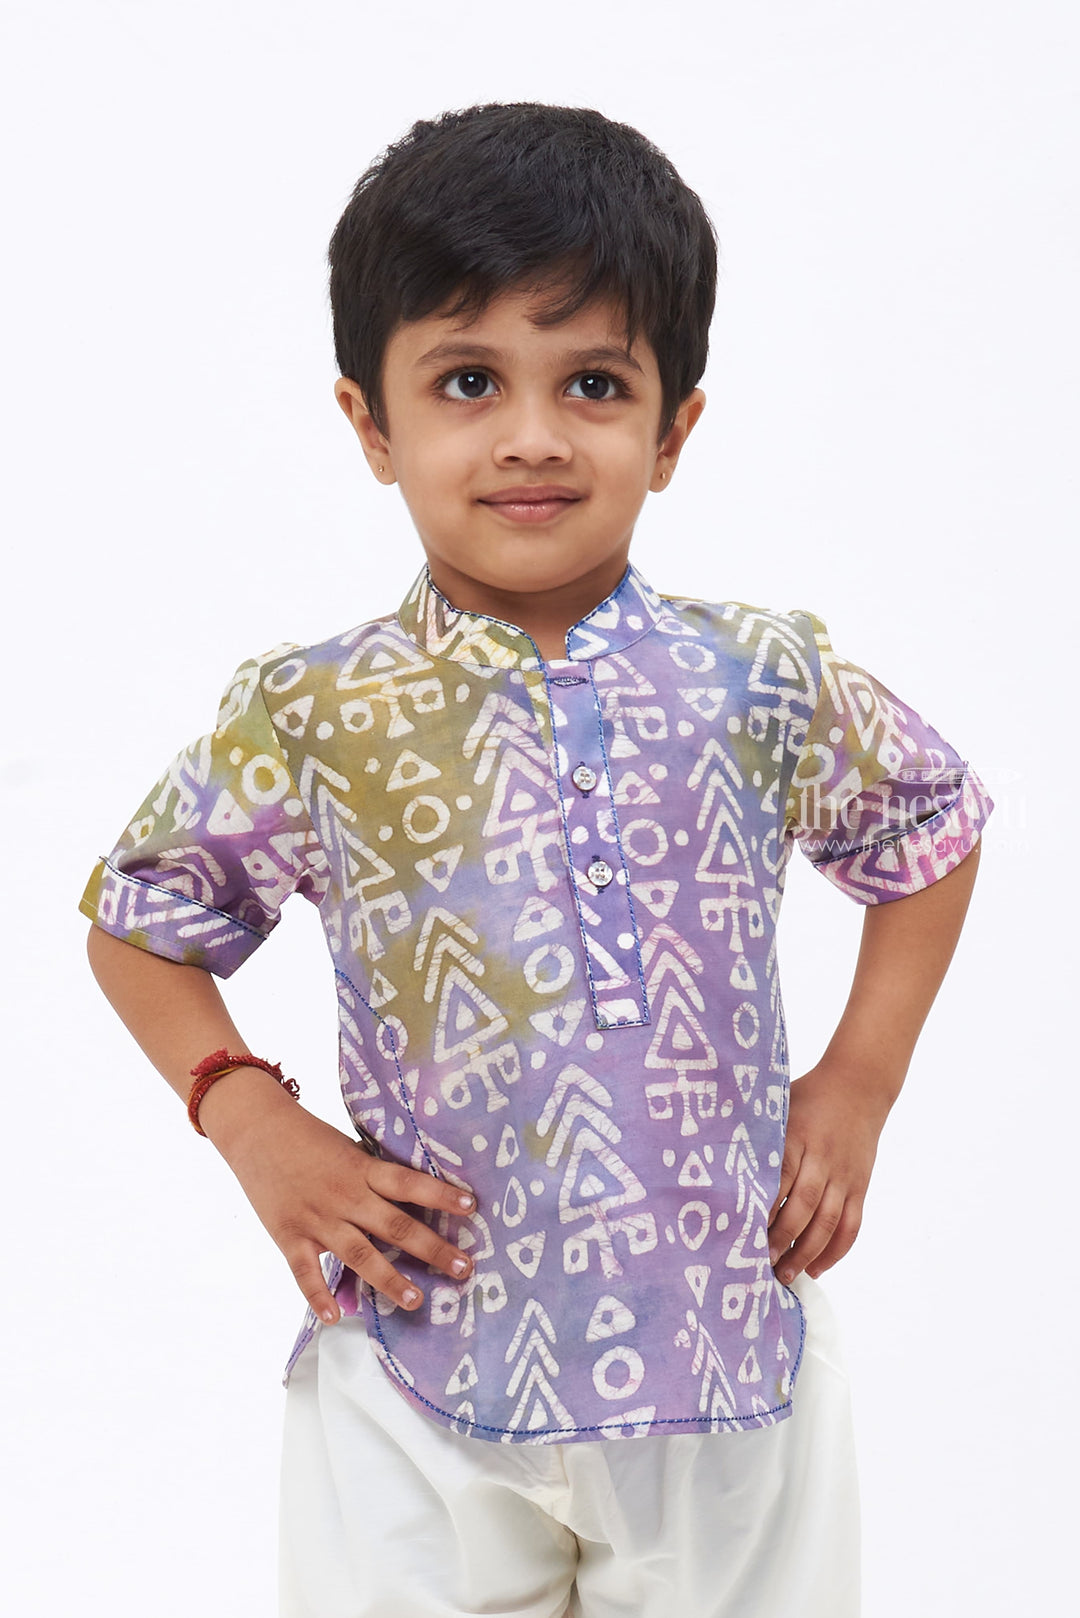 The Nesavu Boys Kurtha Shirt Boys Gradient Purple Cotton Shirt with Triangular Patterns Nesavu 16 (1Y) / Purple / Chanderi BS115A-16 Boys Purple Cotton Shirt | Triangular Motif Design | Modern Casual Apparel | The Nesavu